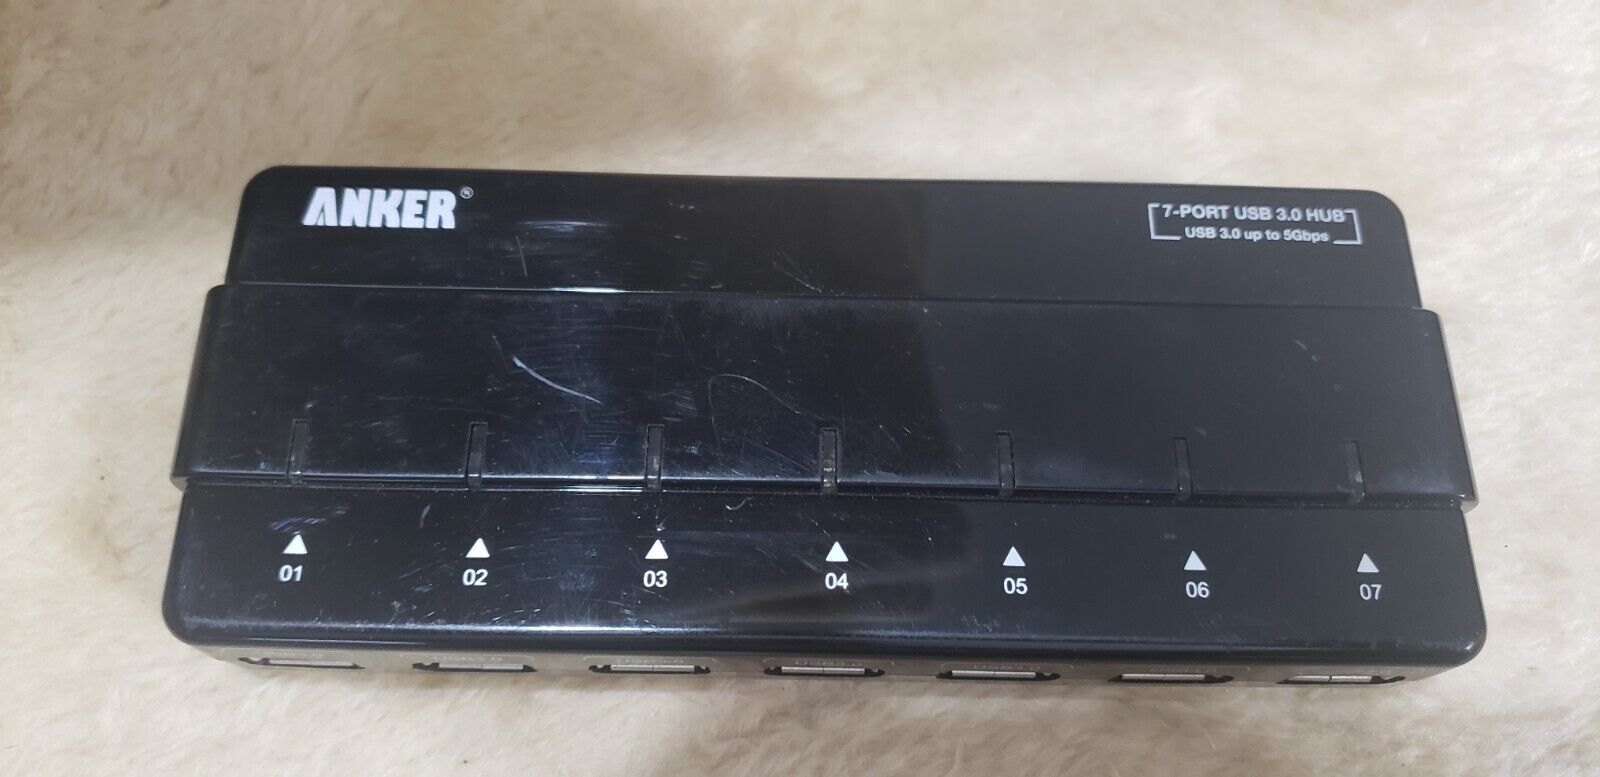 Anker 7-Port USB 3.0 Desktop HUB H7928-U3 No Power Adapter